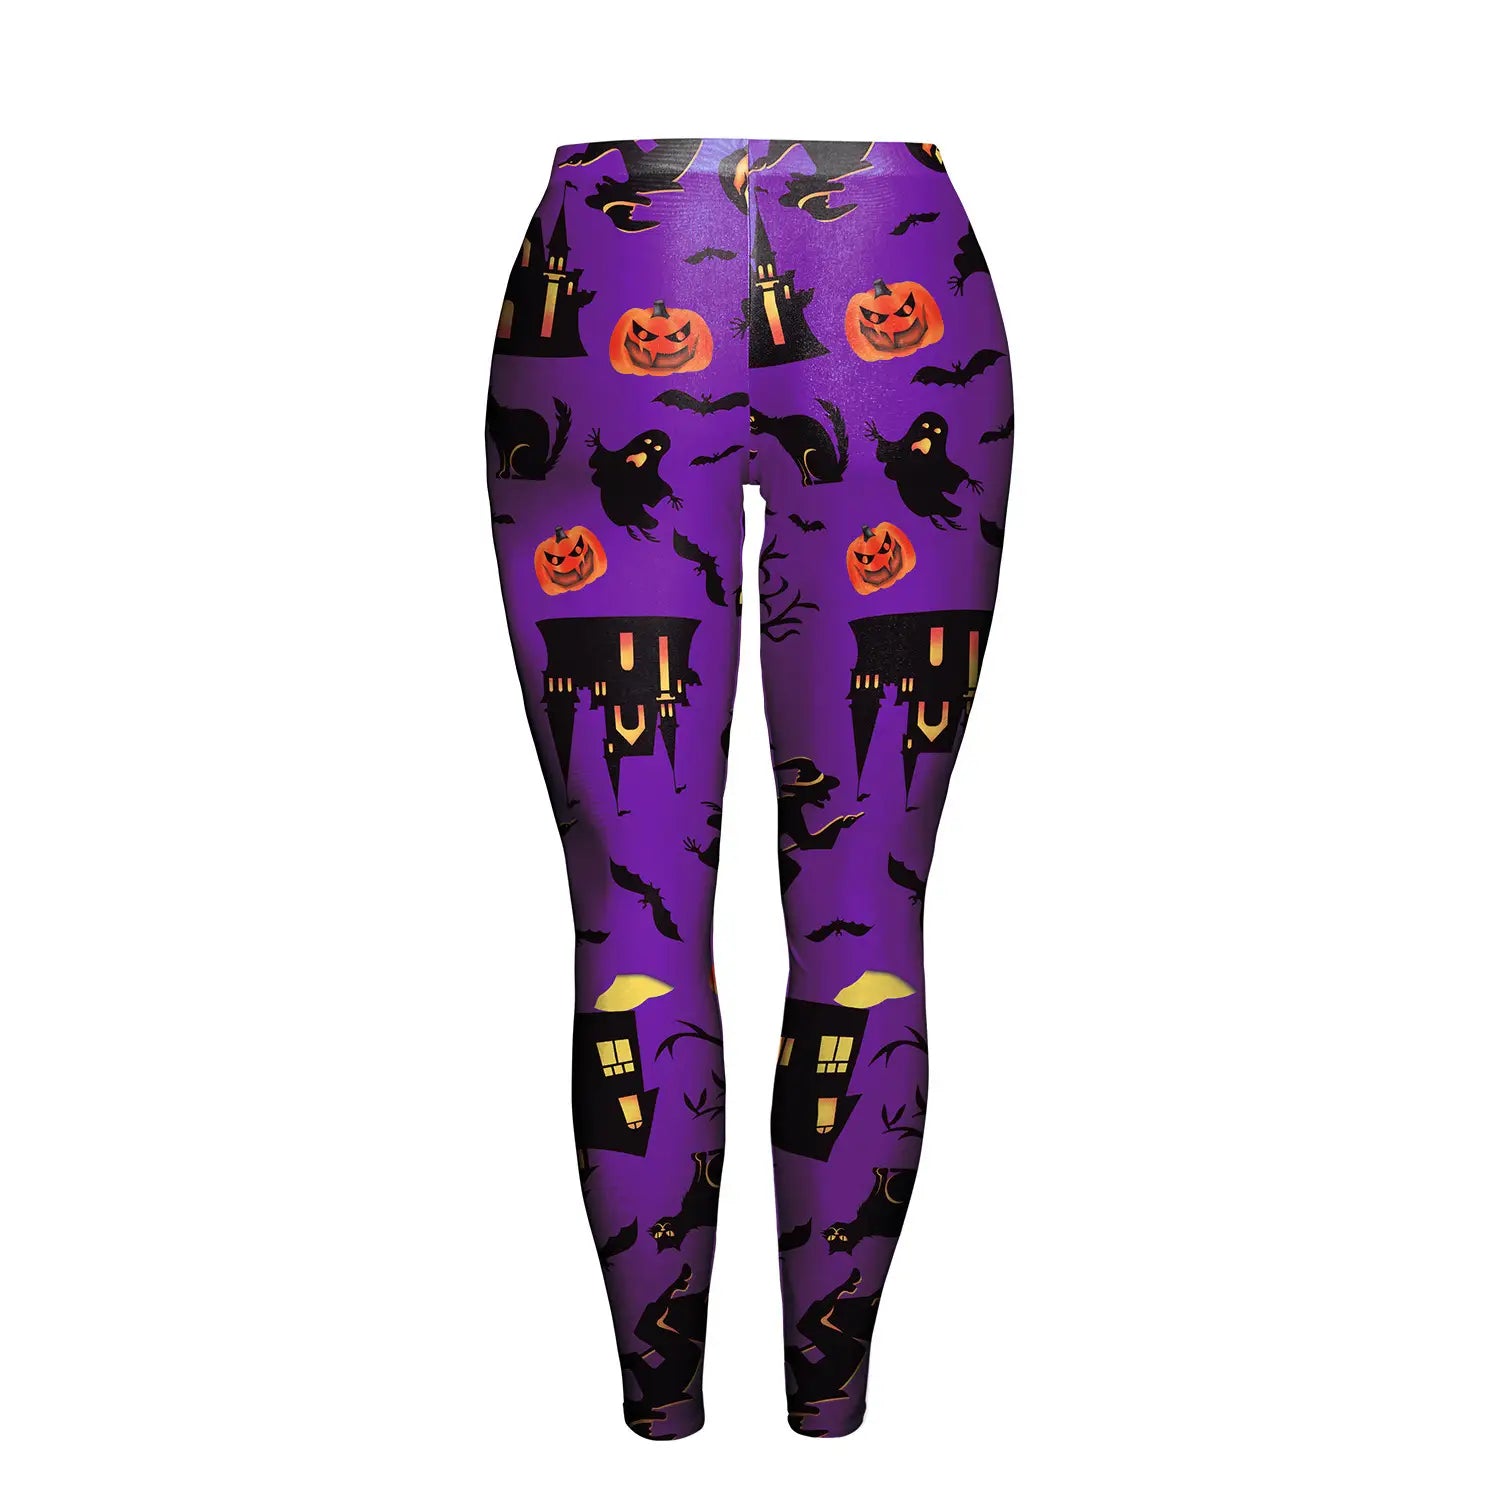 Lovemi - Creative pumpkin leggings